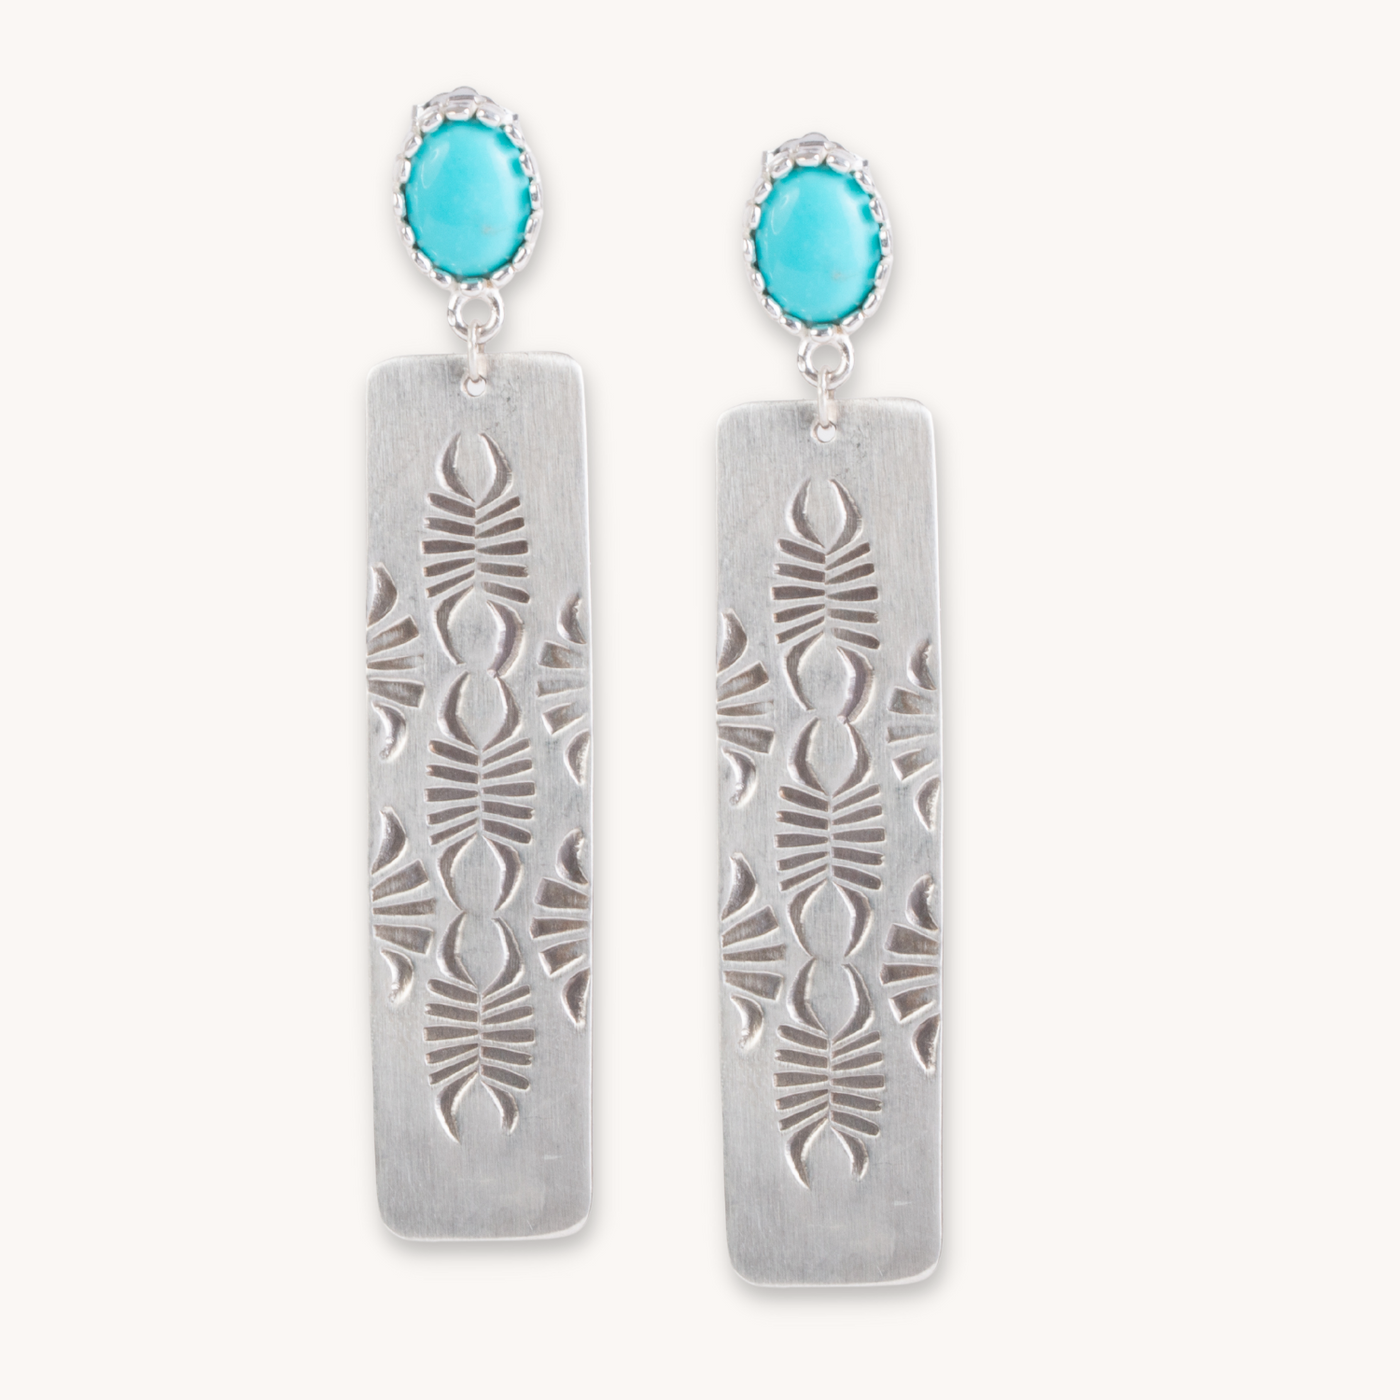  Handmade Native American Silver  Earrings by TSkies